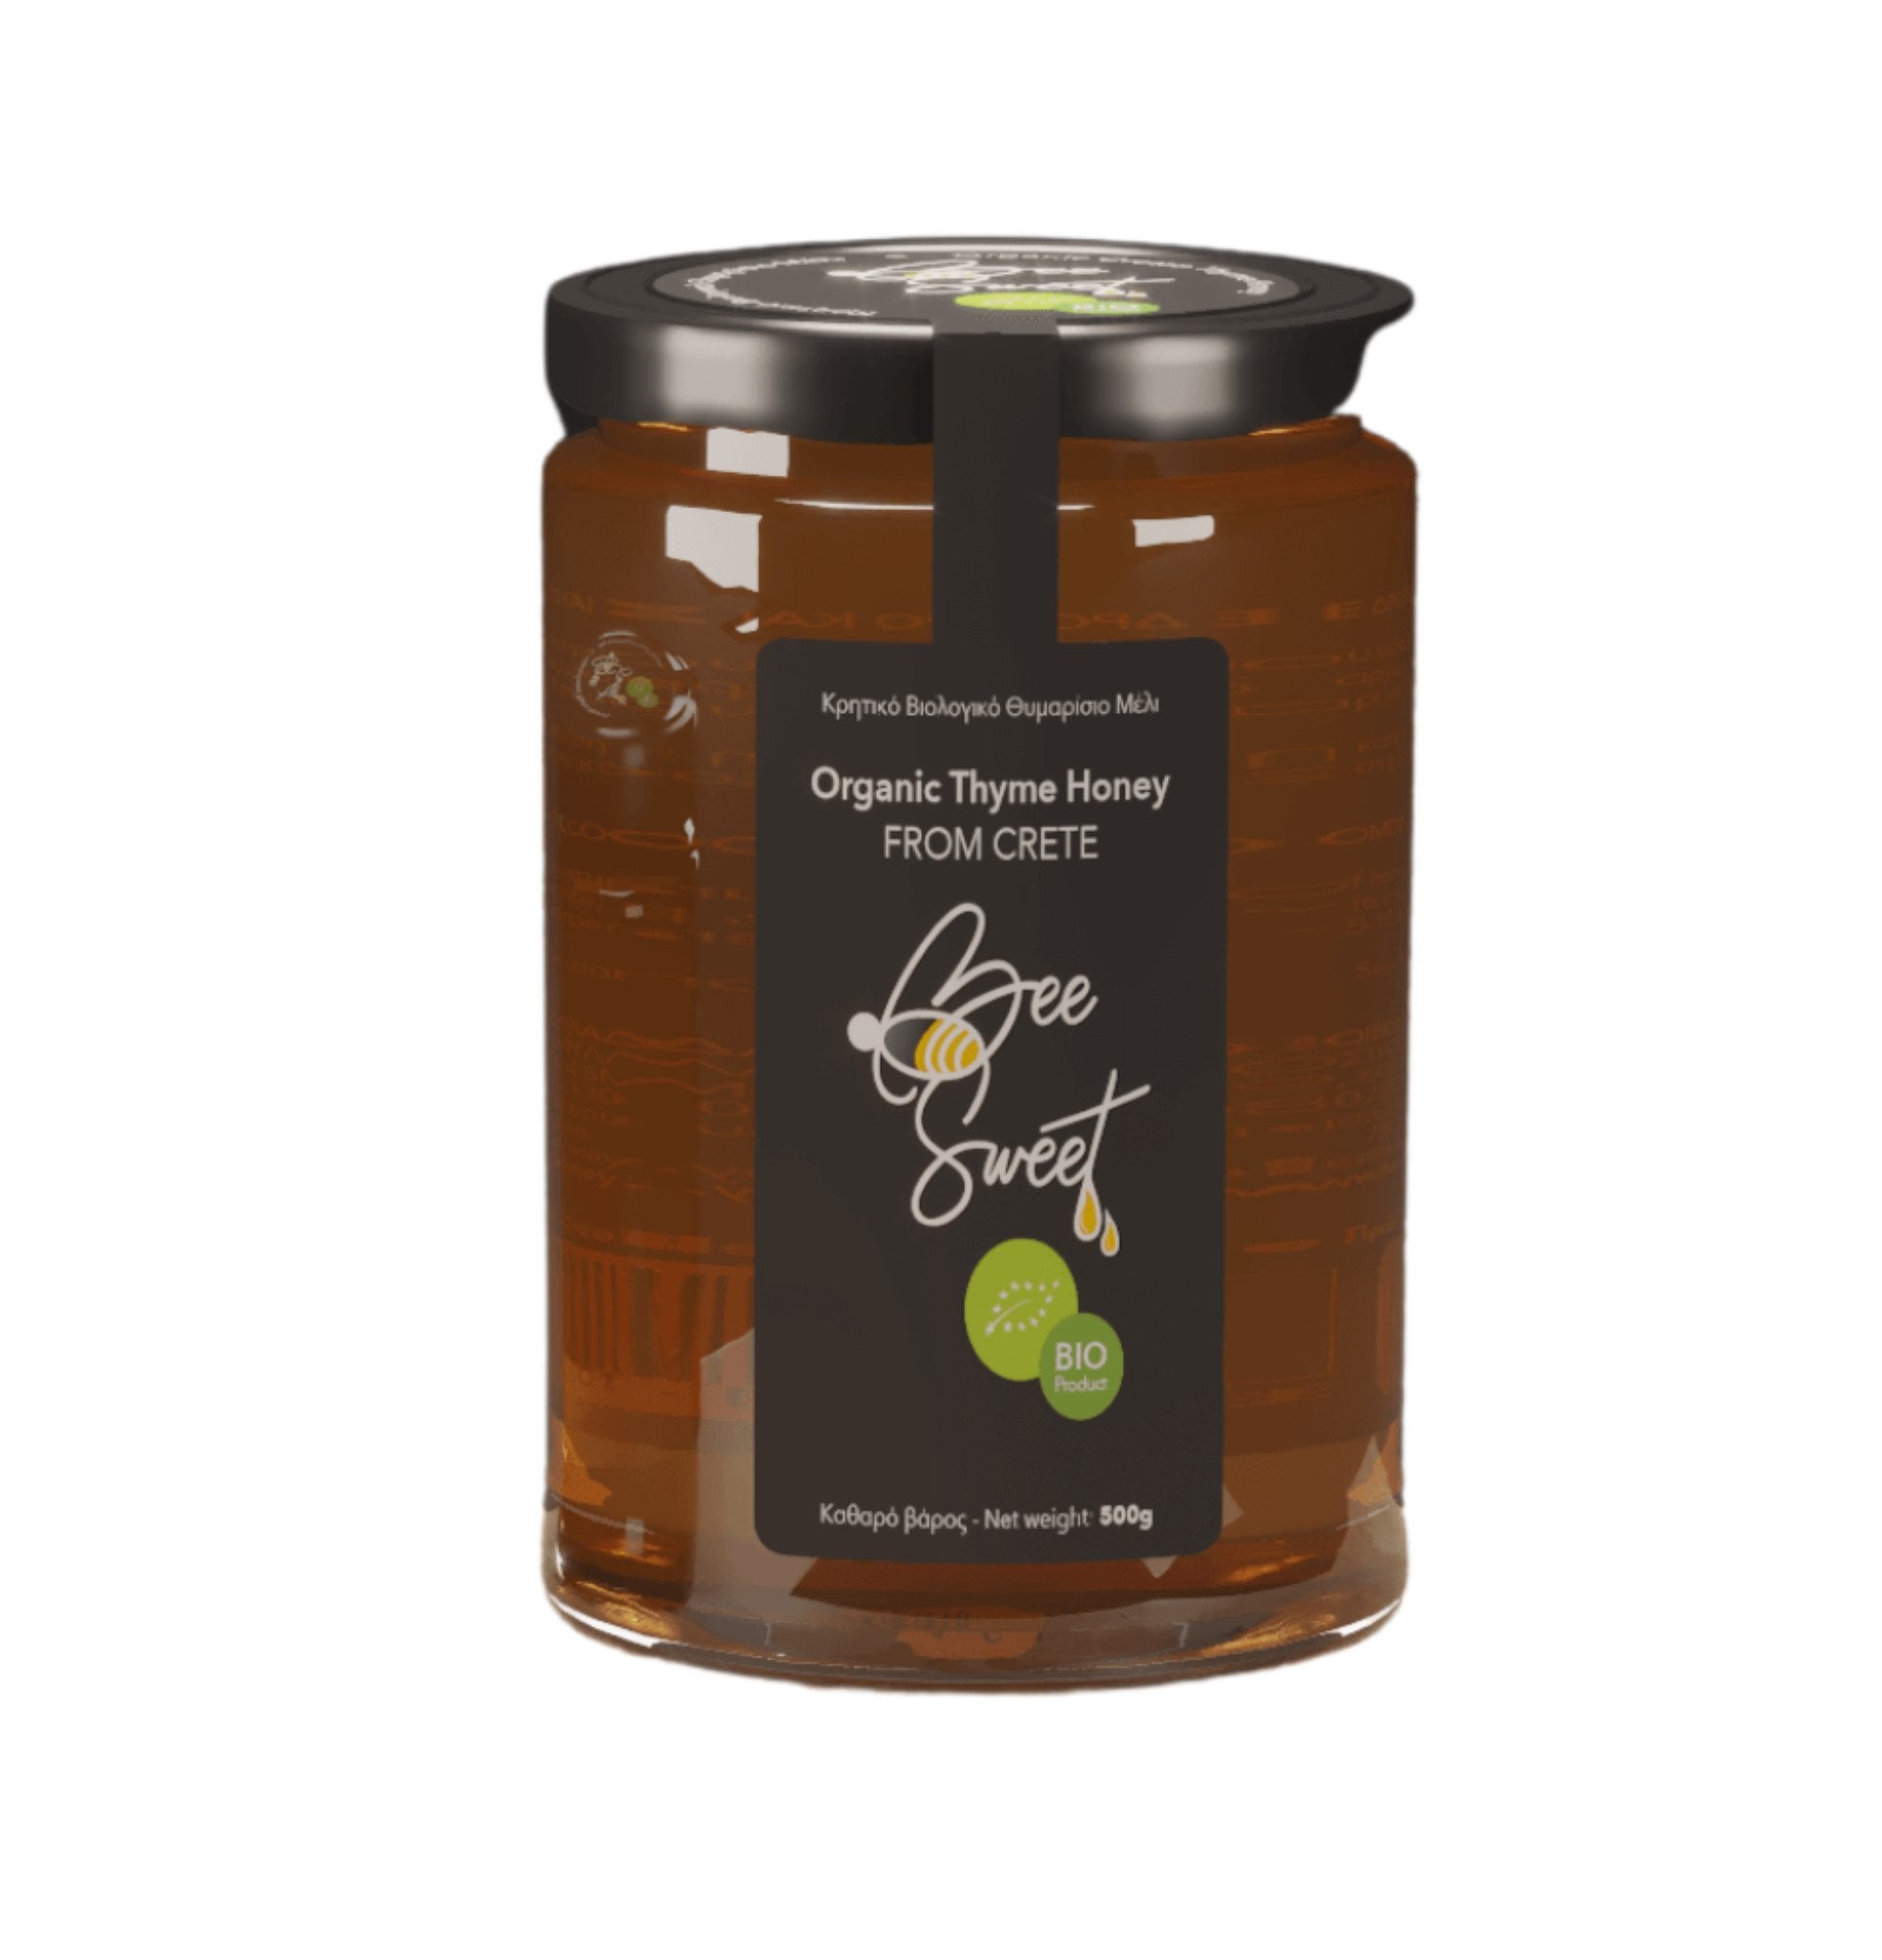 Organic Thyme Honey